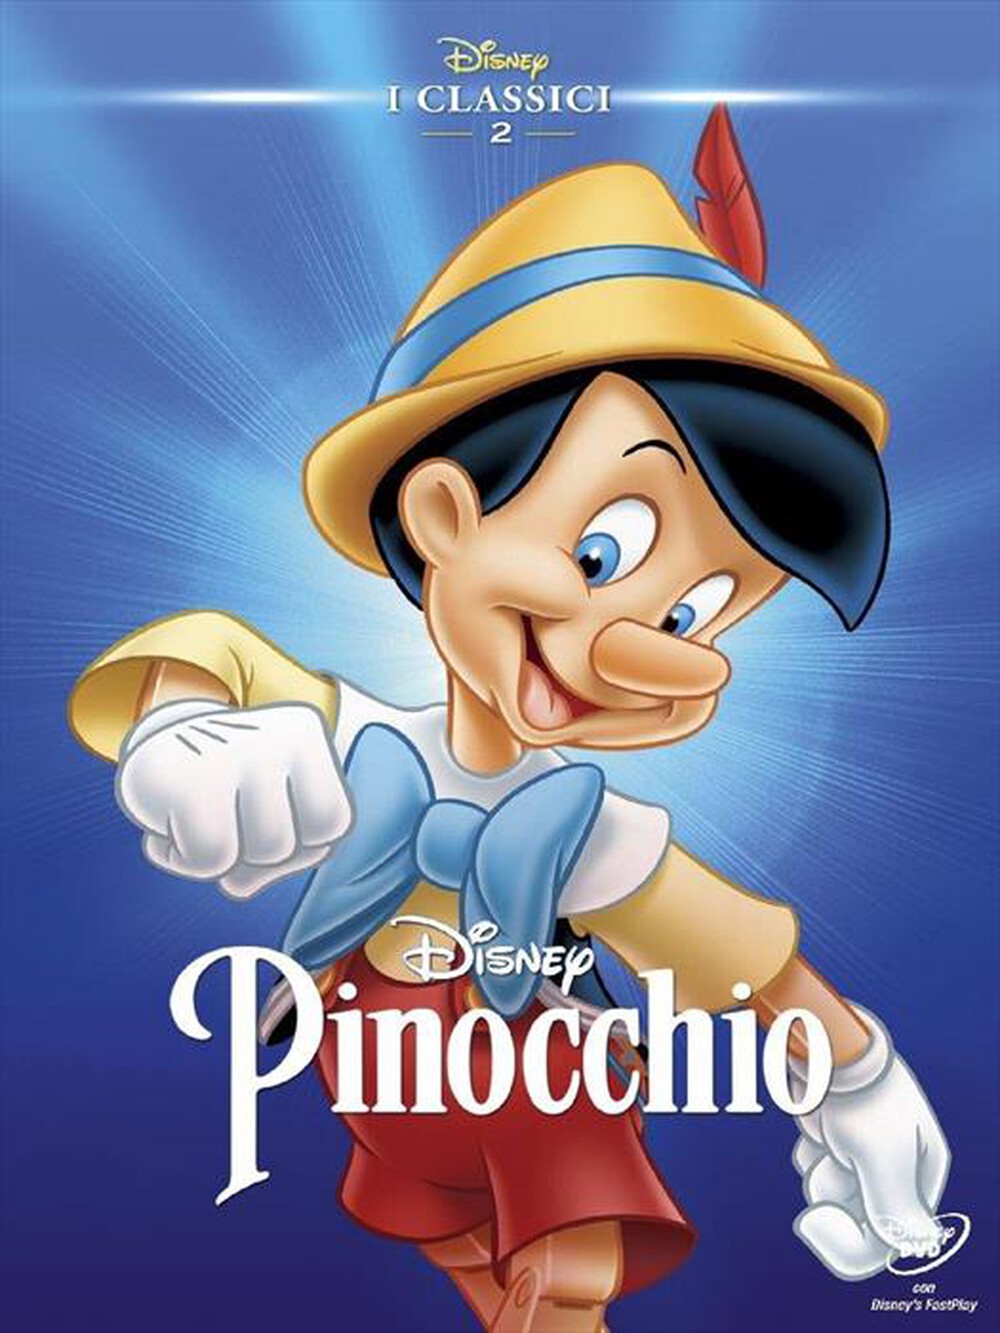 "WALT DISNEY - Pinocchio"